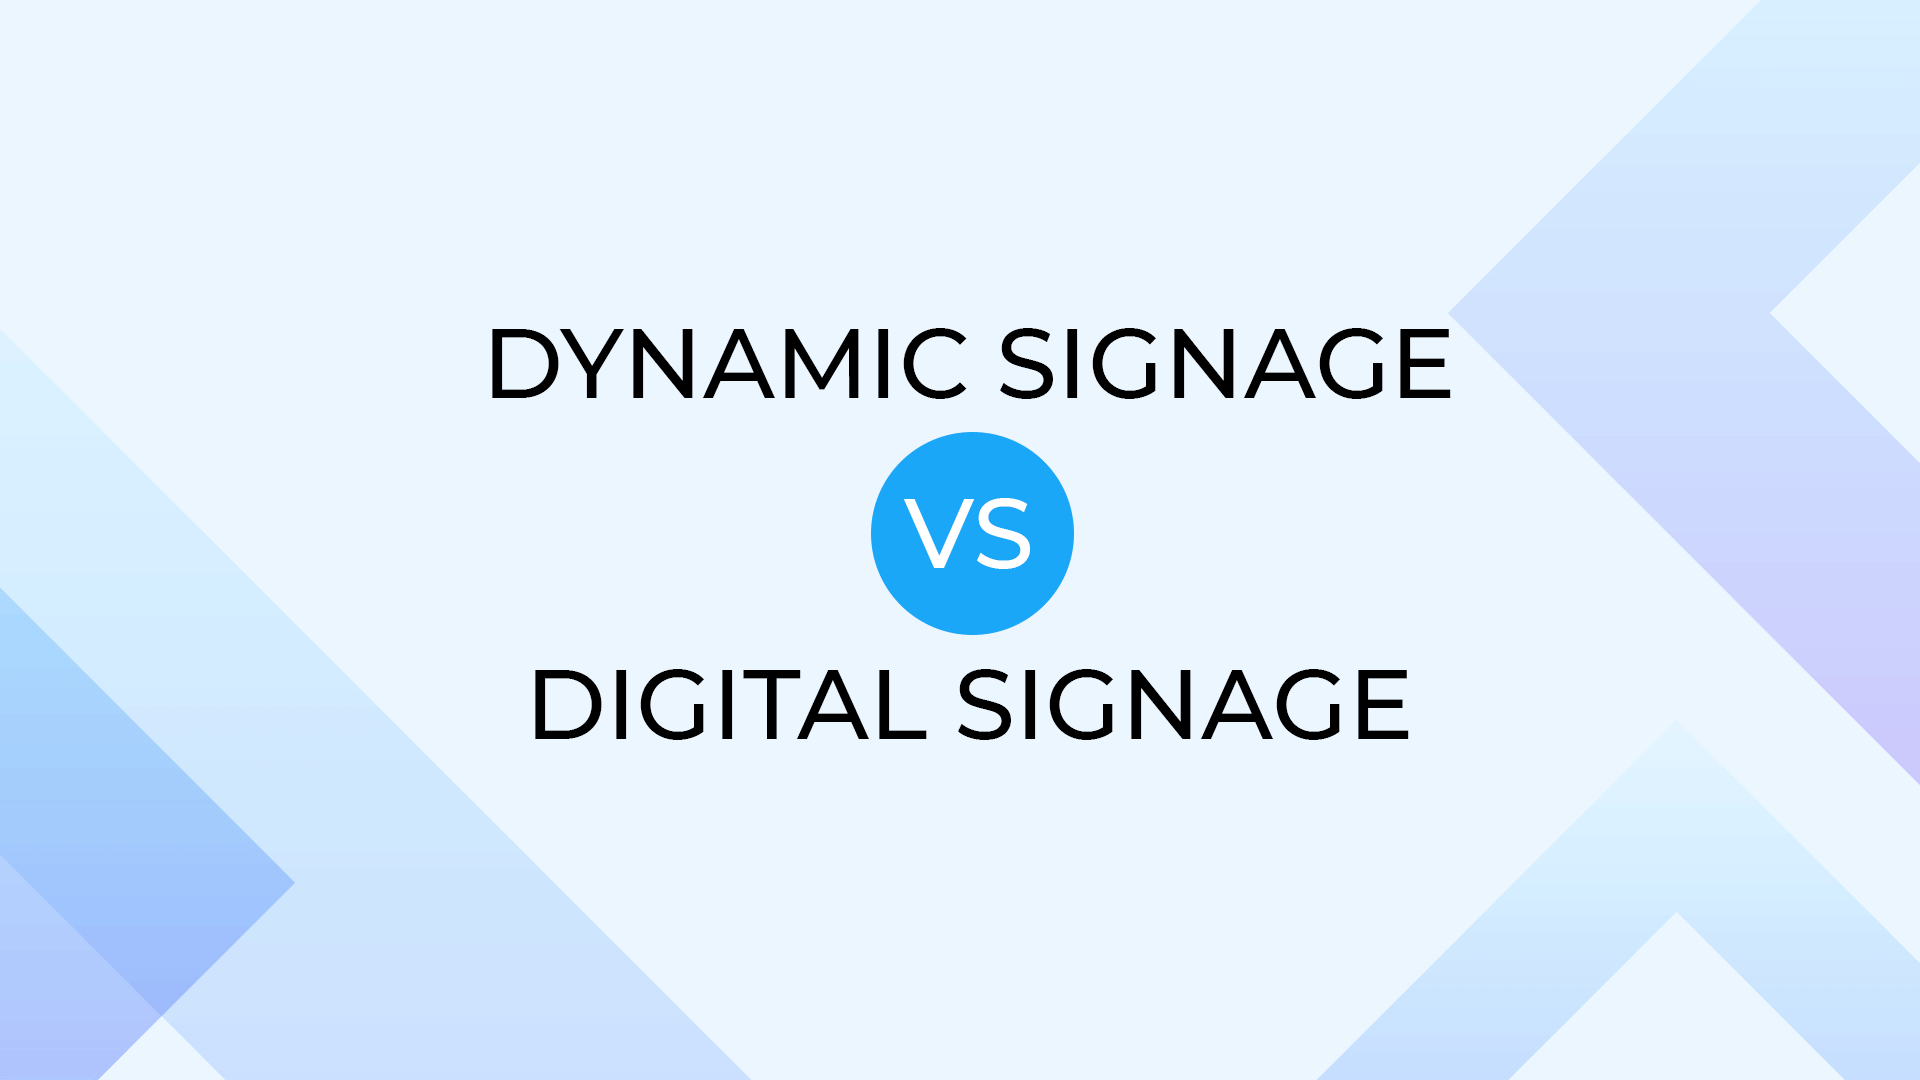 Dynamic signage vs. Digital signage